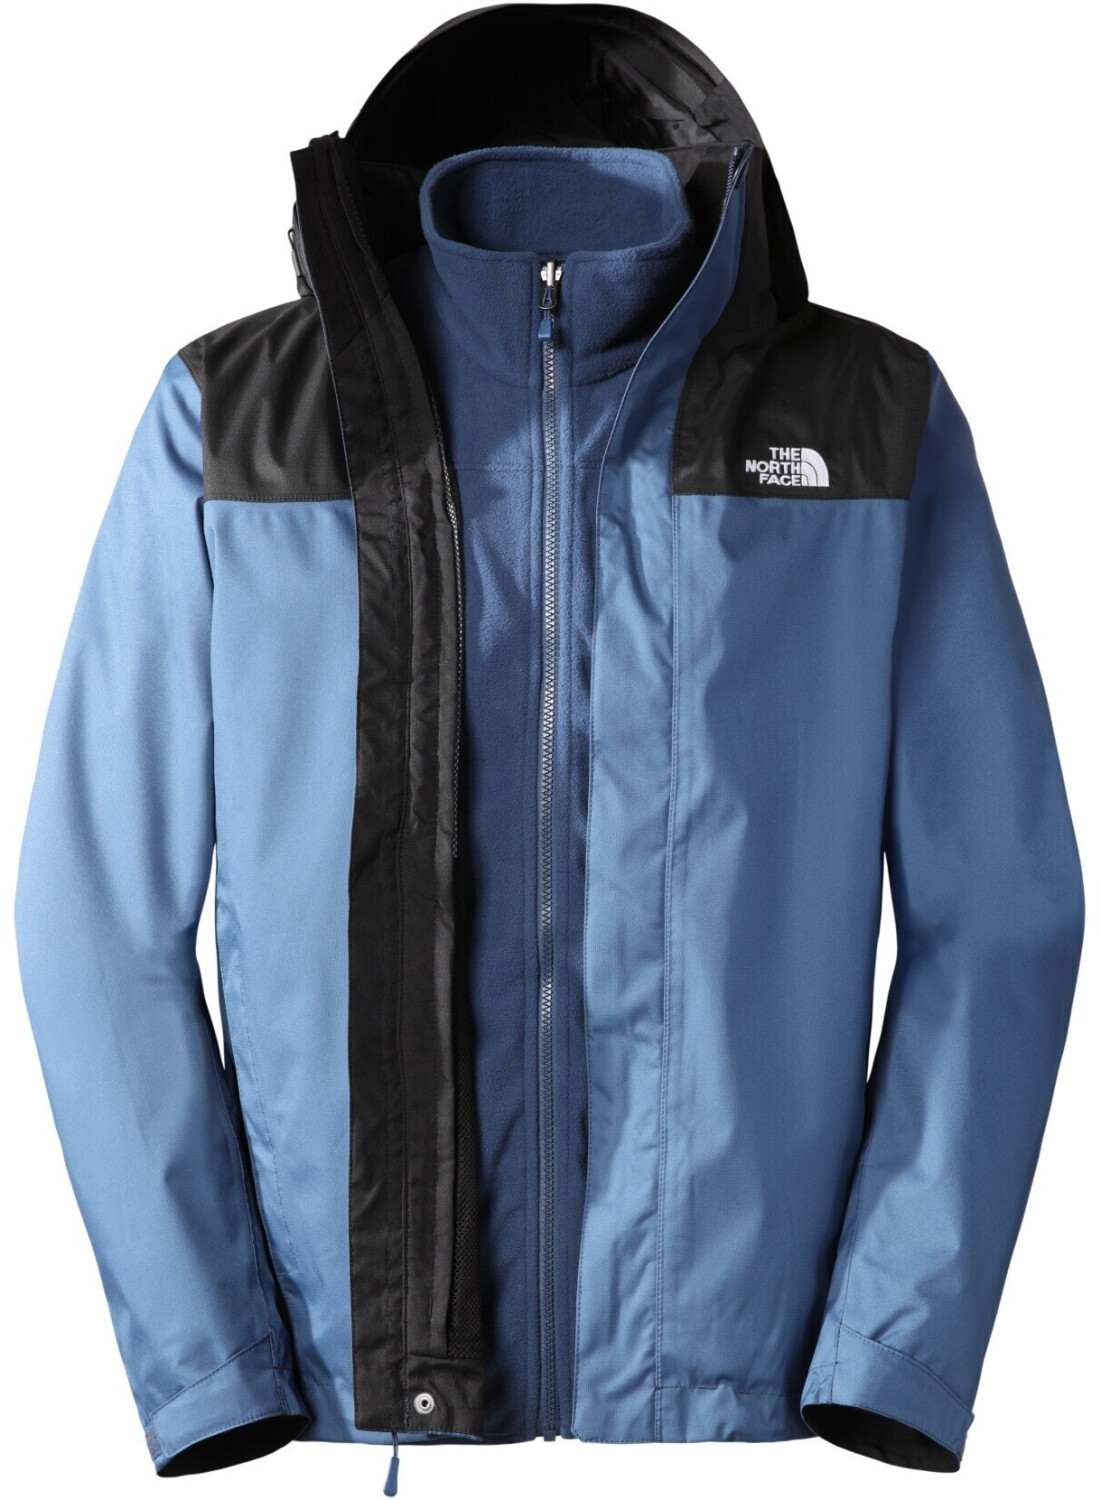 The North Face Men Evolve II Triclimate Jacket shady blue/black ab 154,95 €  | Preisvergleich bei